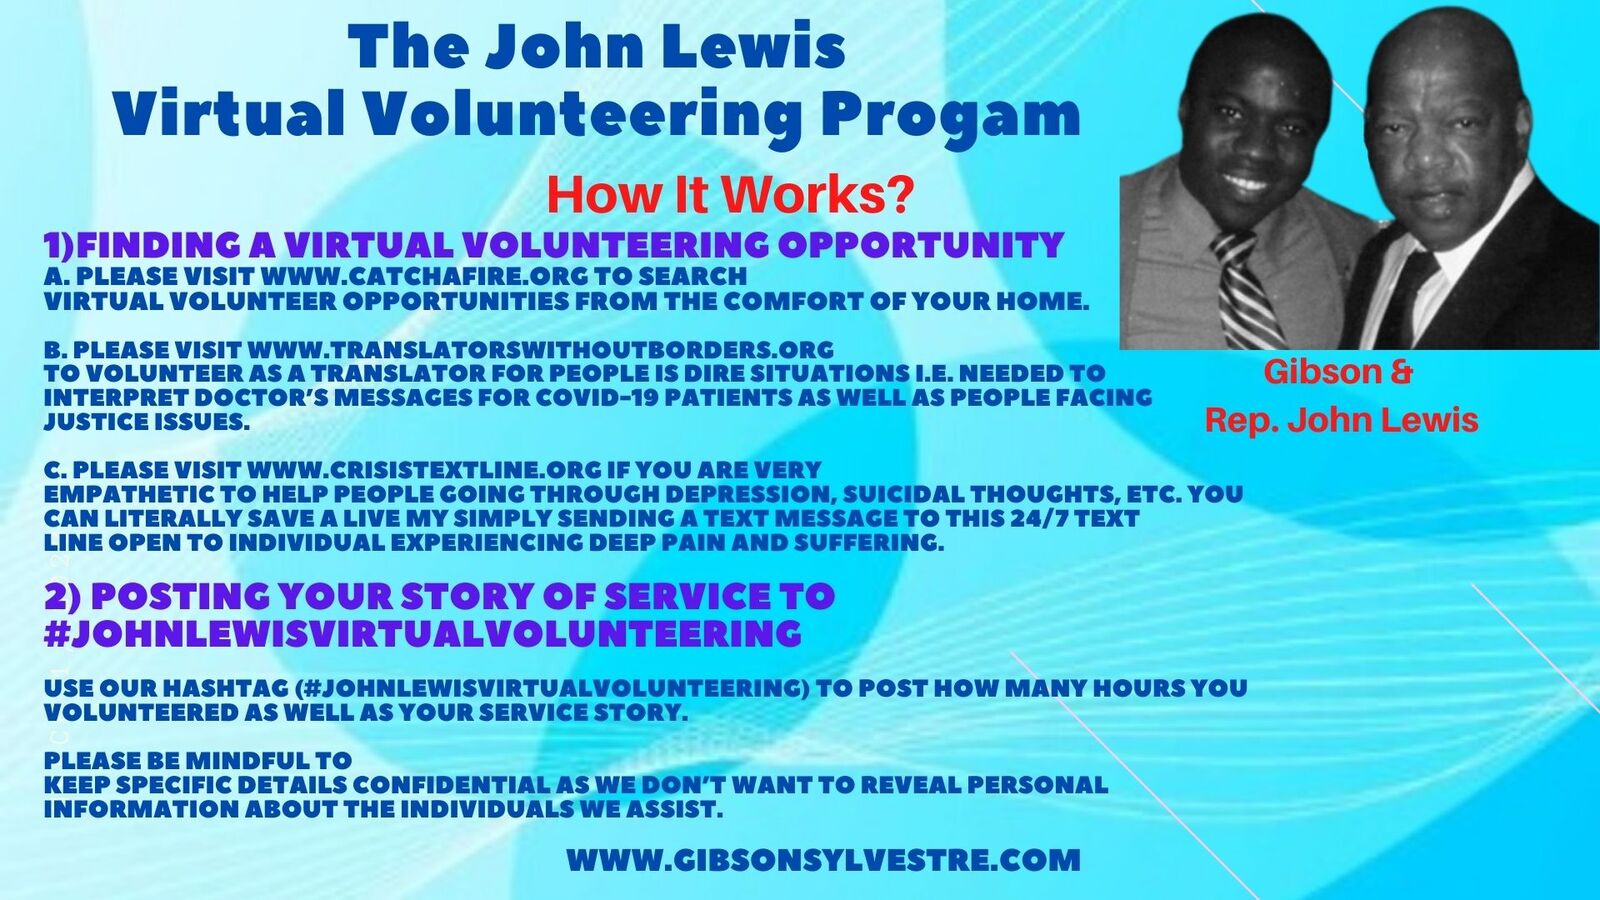 The John Lewis Virtual Volunteering Program with Gibson Sylvestre